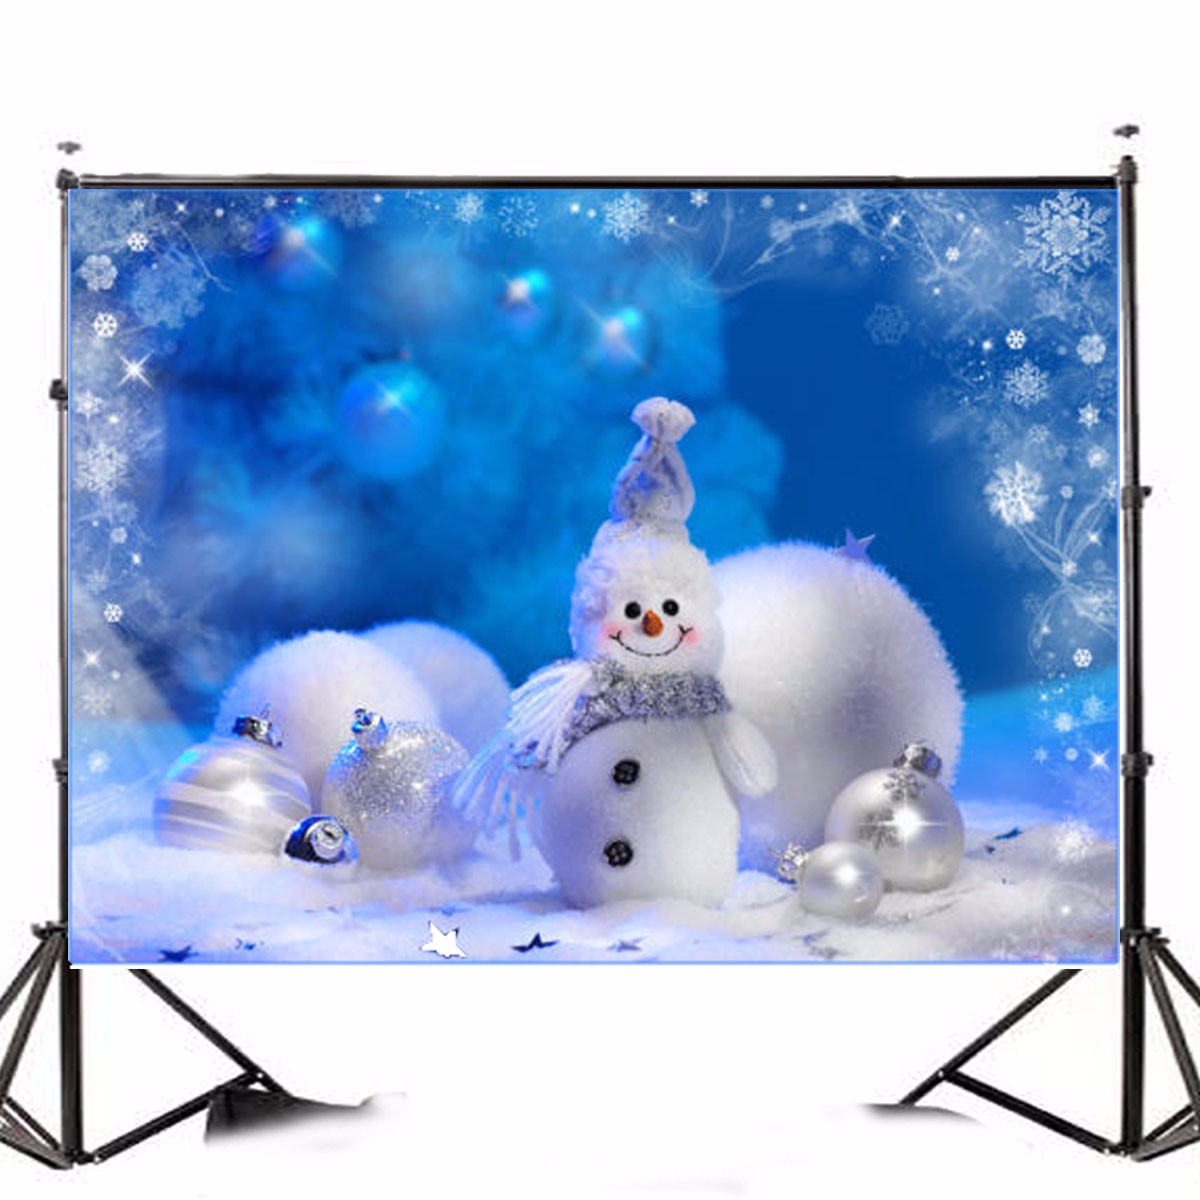 Vinyl-Fabric-Christmas-Snowman-Studio-Photography-Background-Backdrop-1104876-1